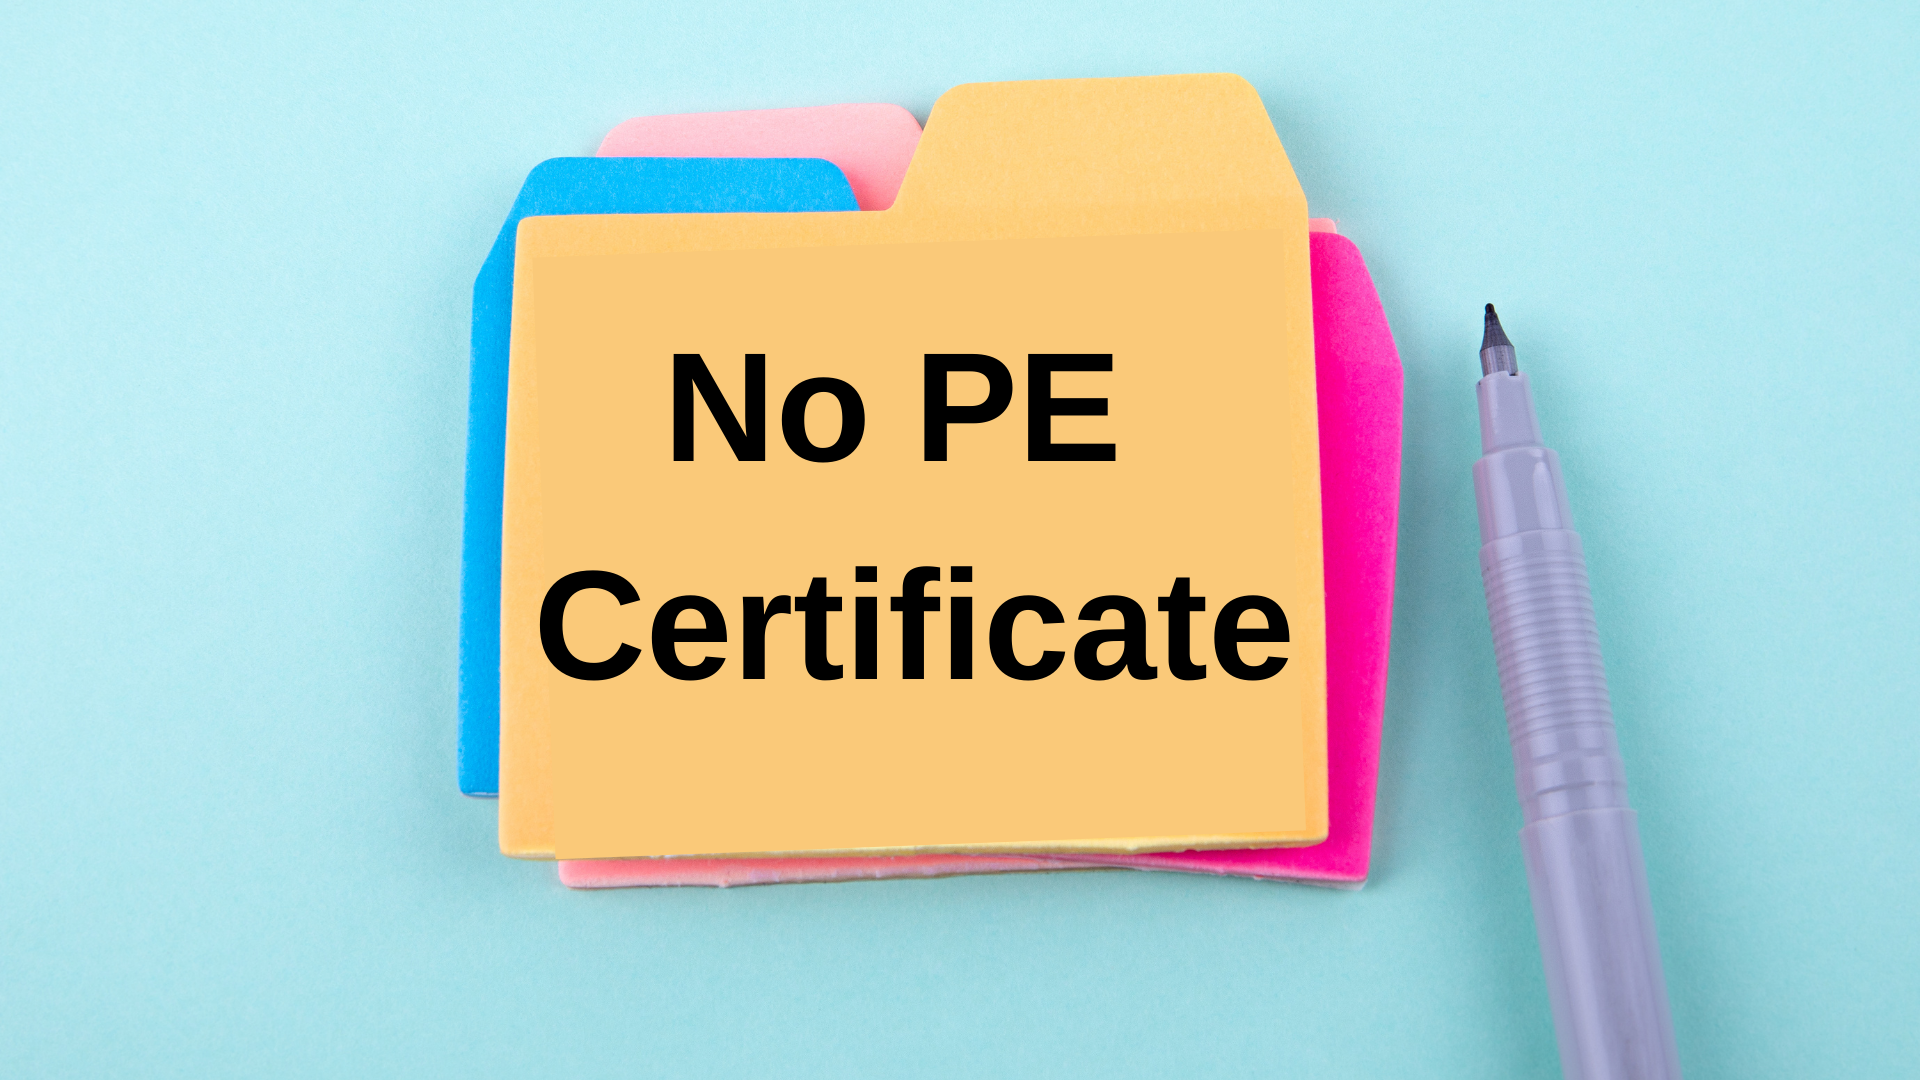 No PE Certificate